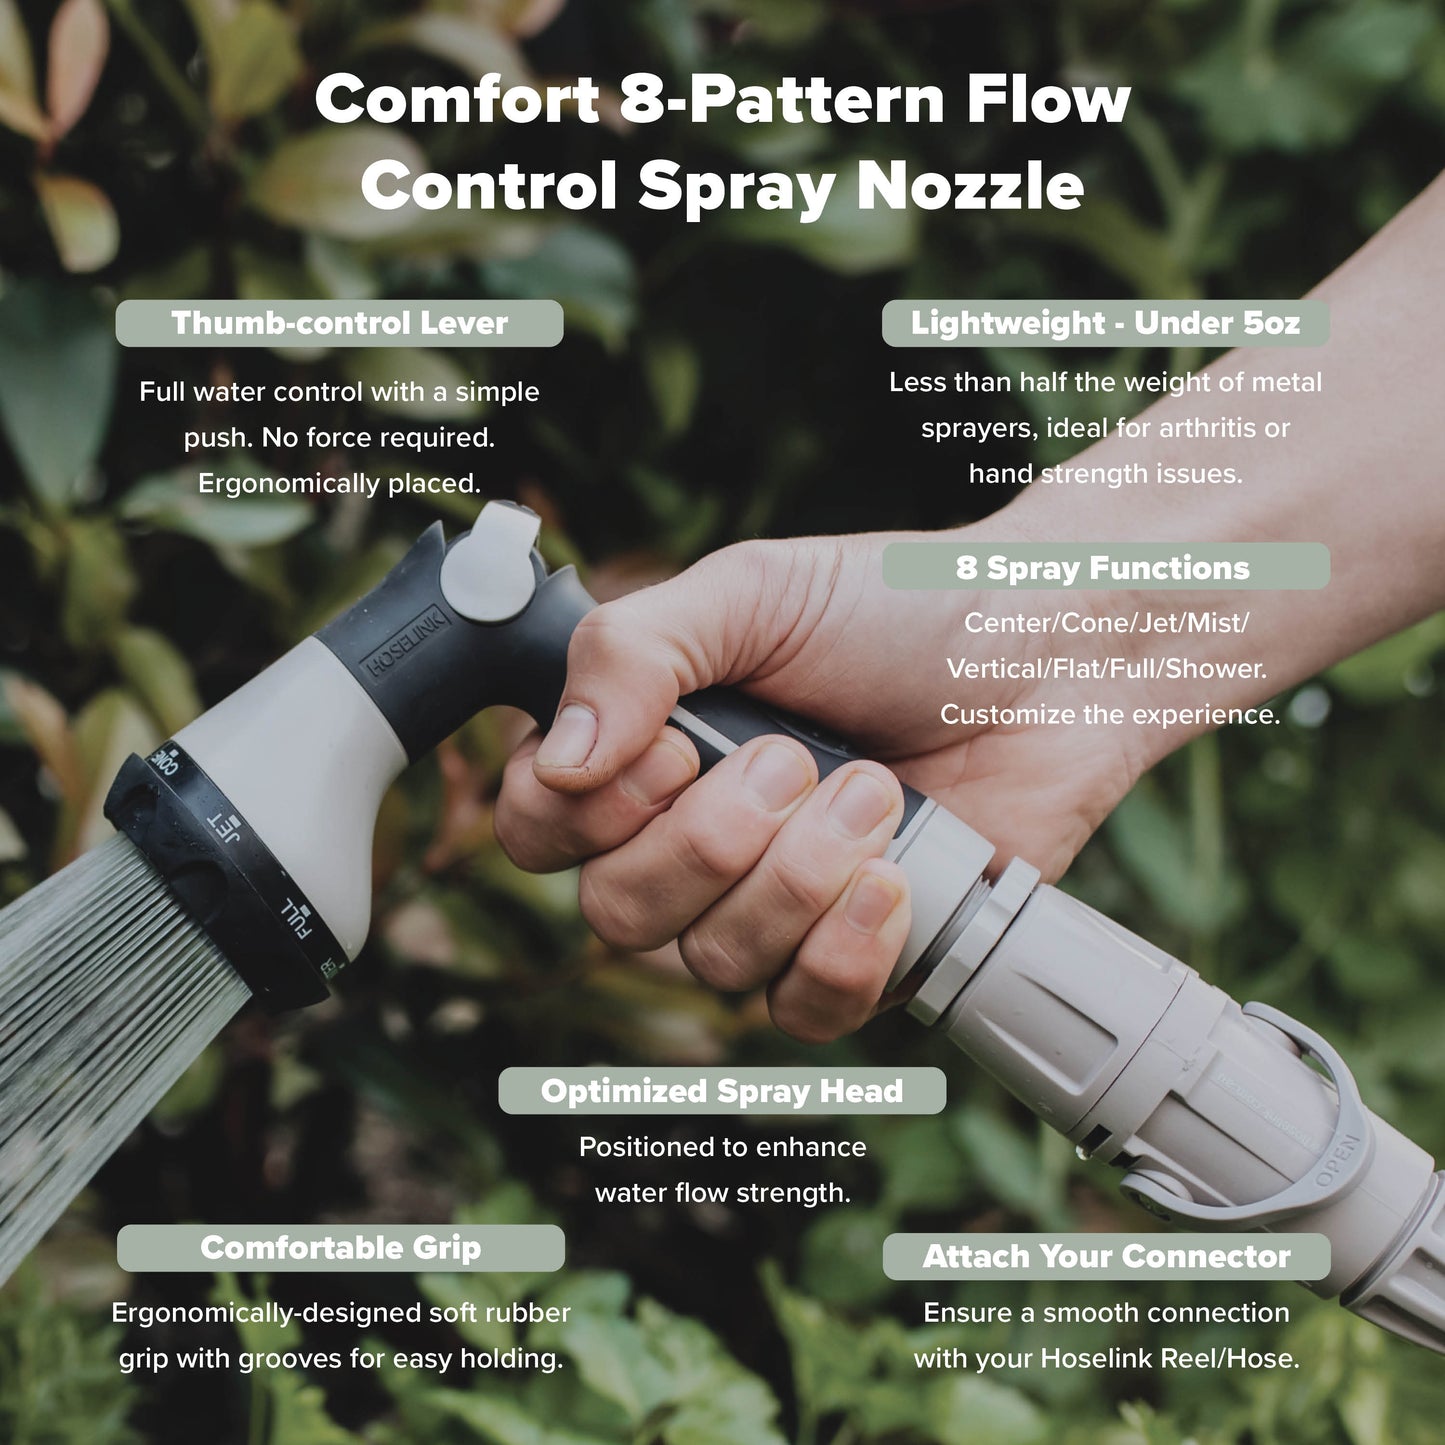 8-Pattern Flow Control Sprayer Explanation Image